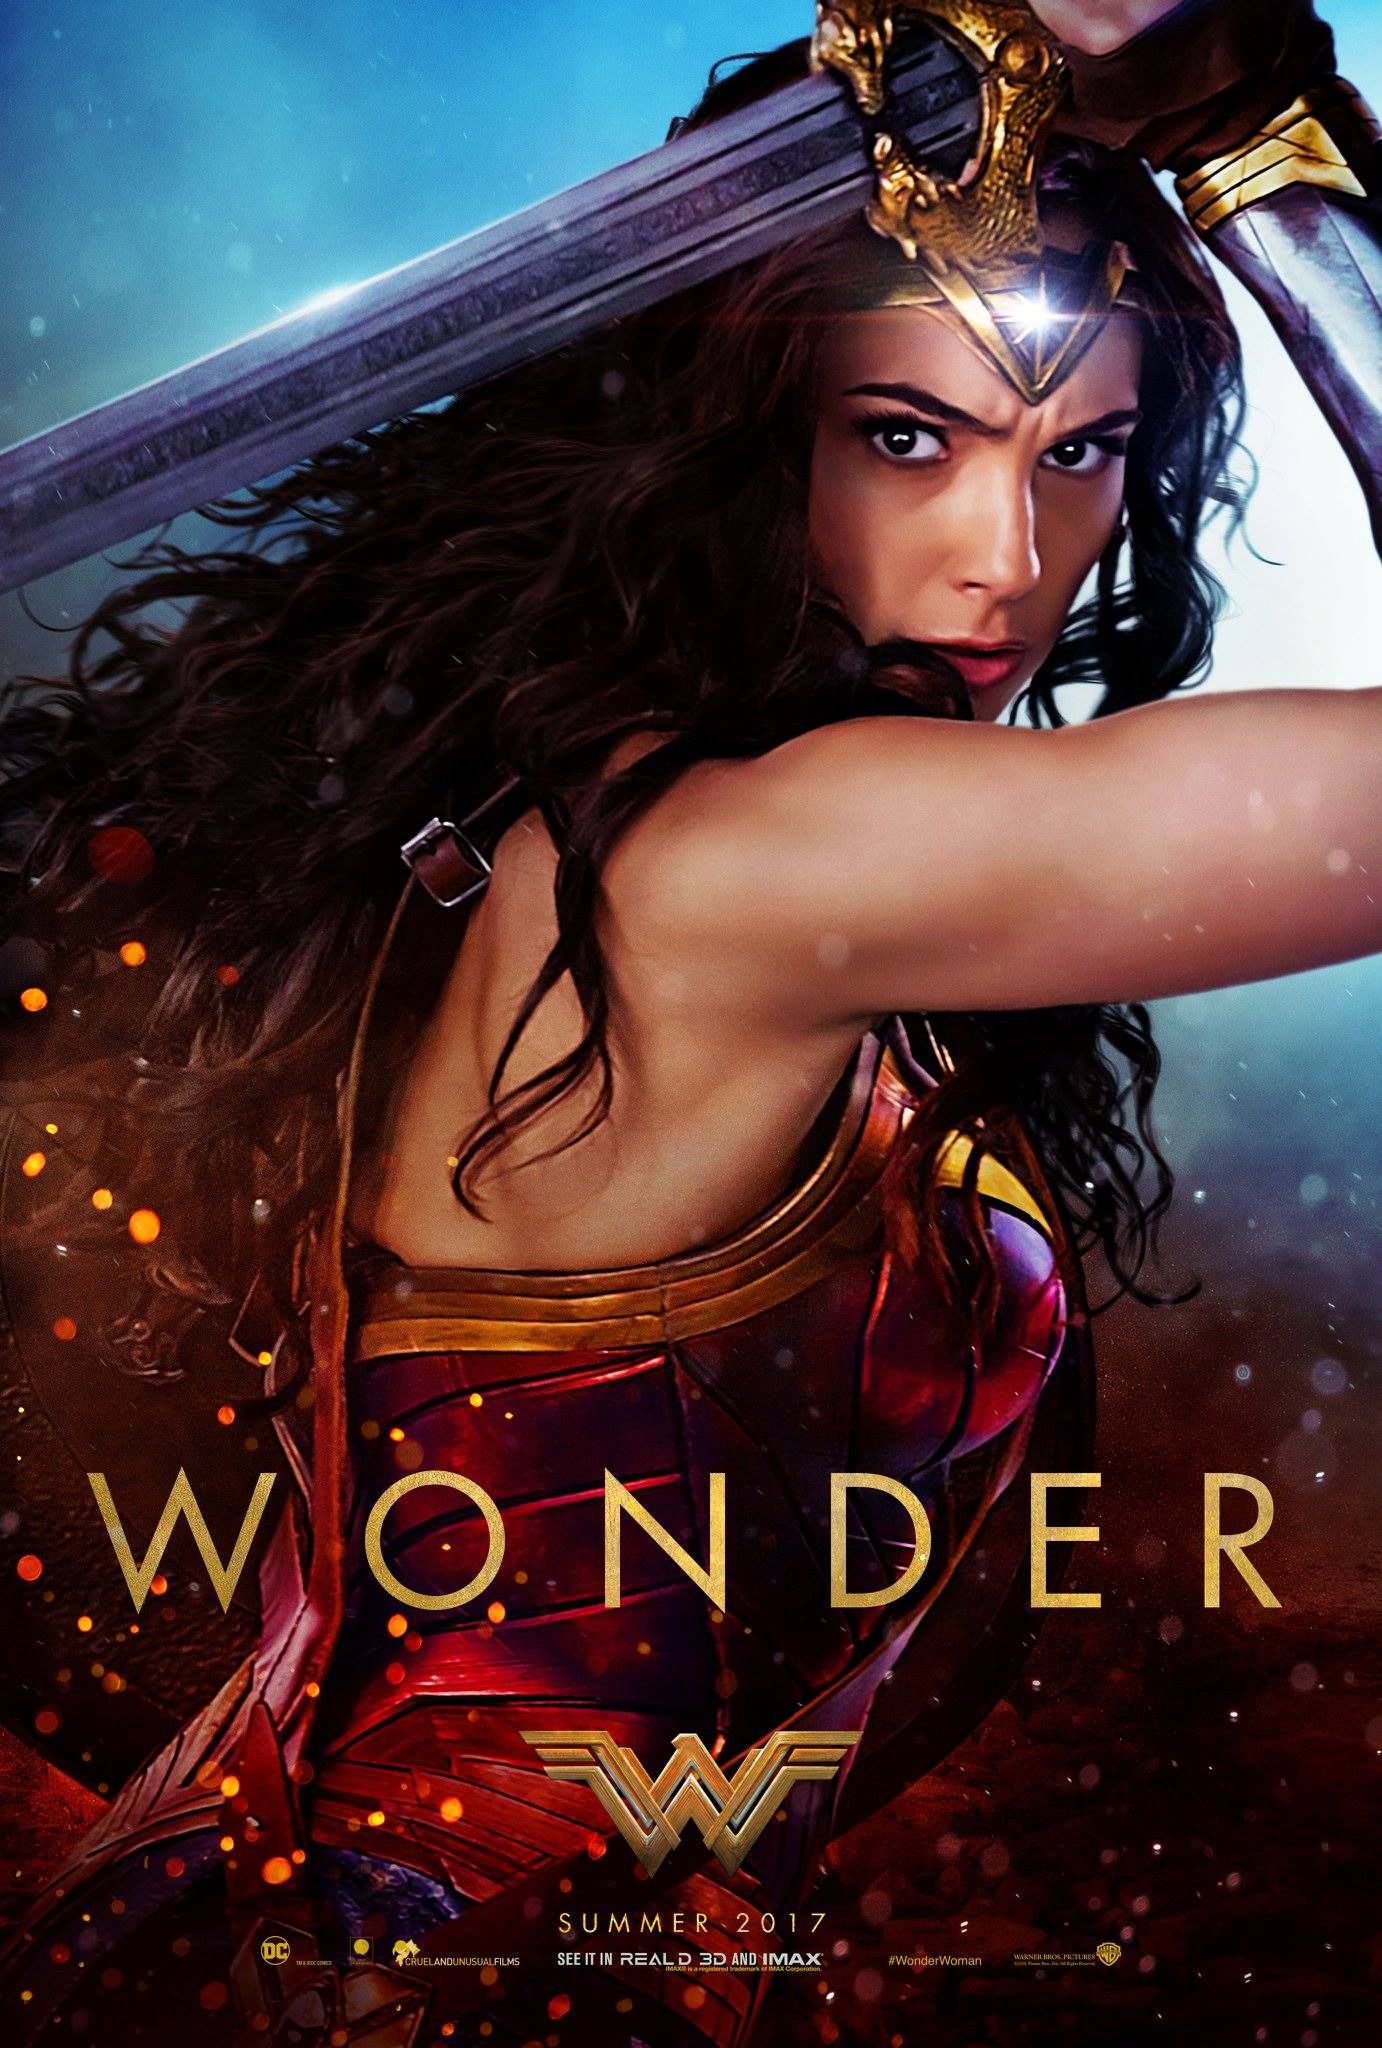 Wonder Woman (2017) Hindi Dubbed Full Movie